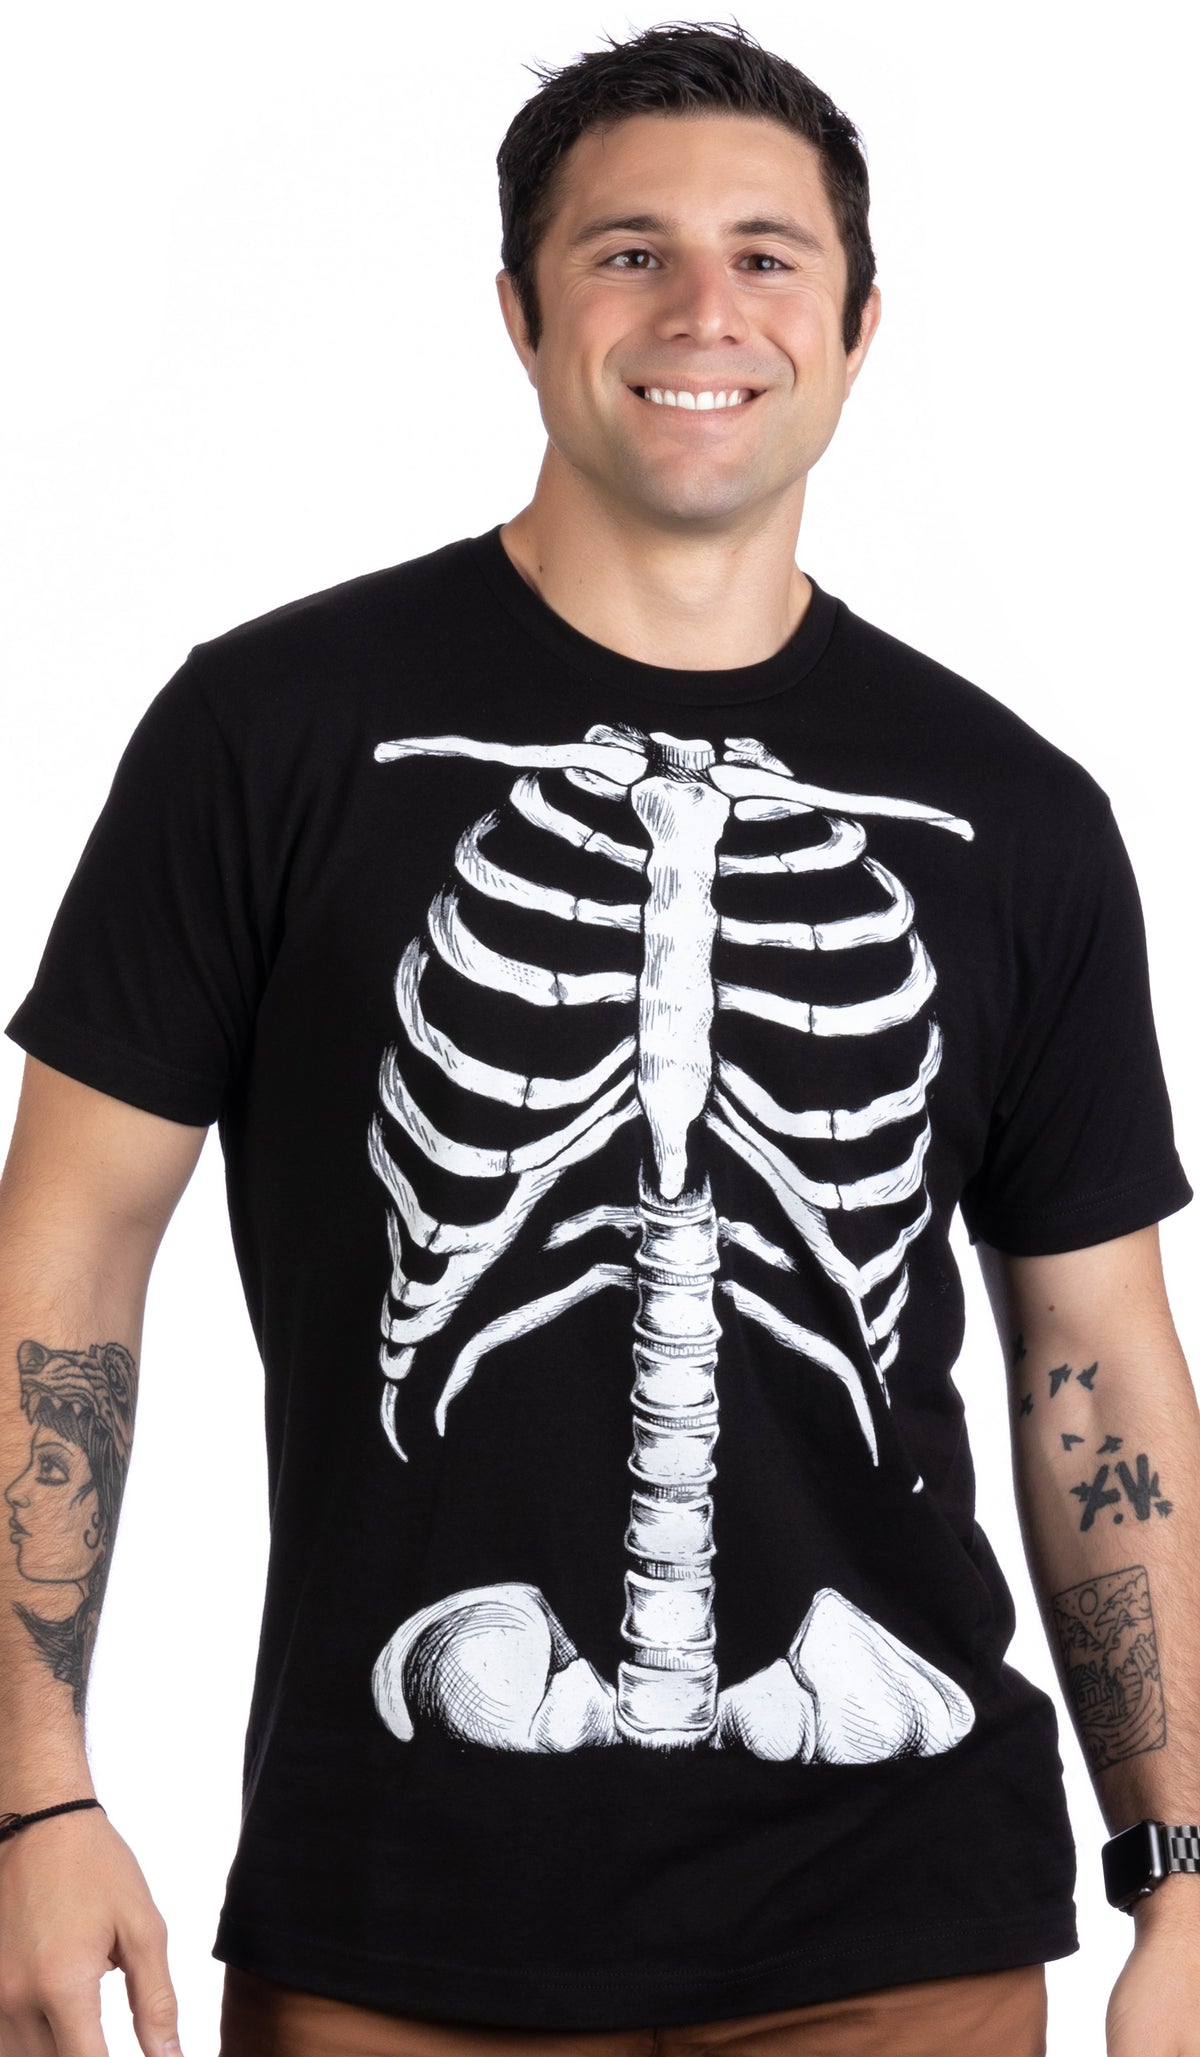 Skeleton Rib Cage Glow-in-the-Dark Costume Tee - Men's